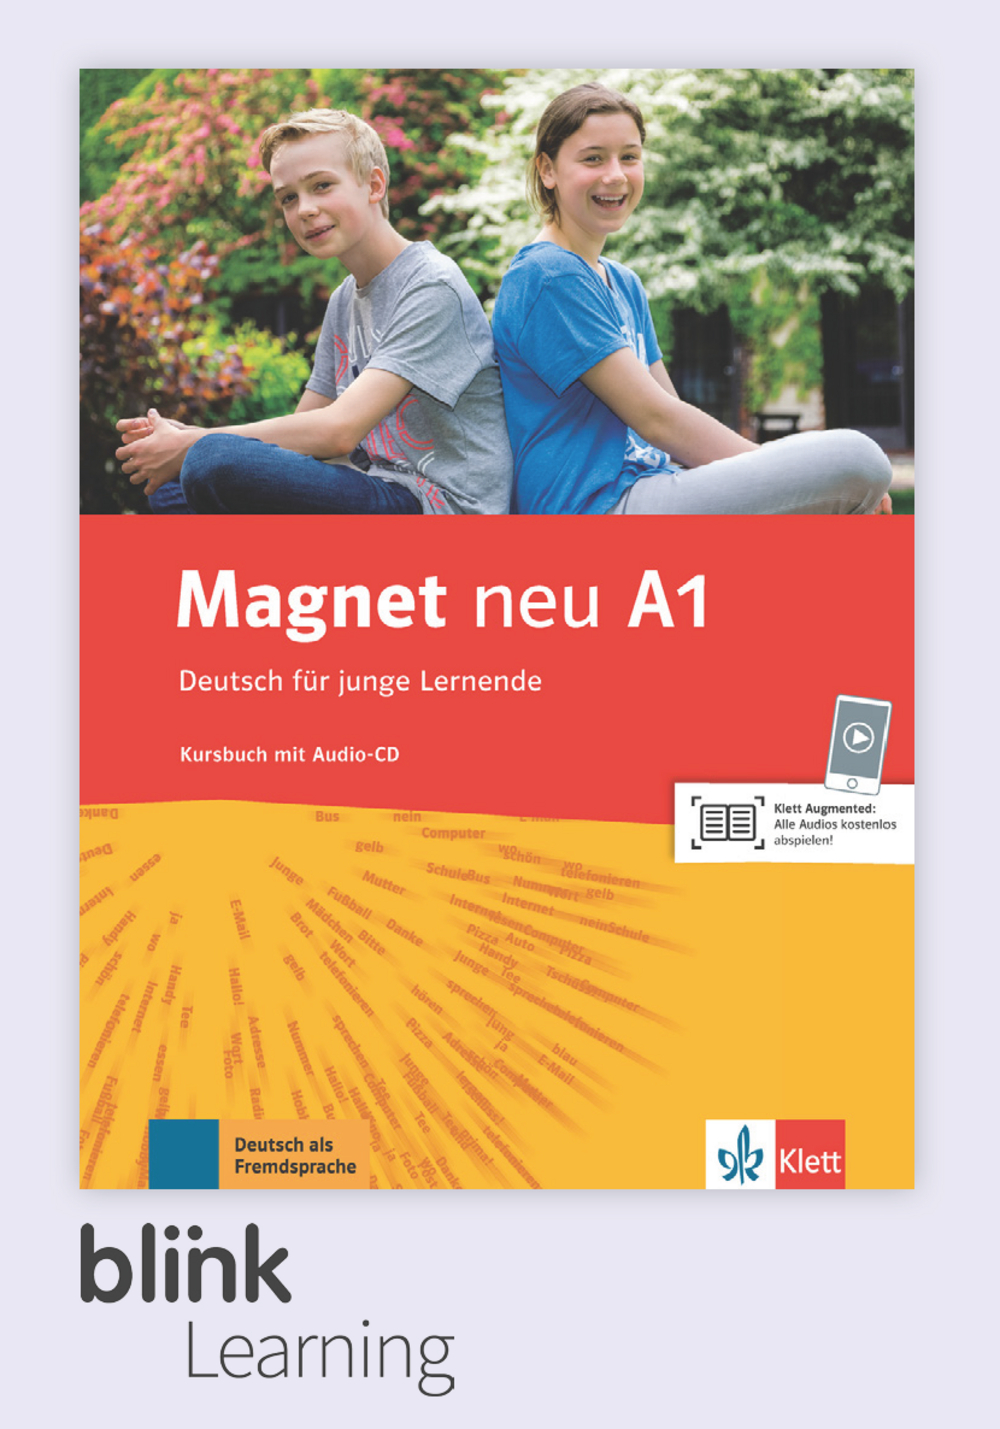 Magnet neu A1 Digital Kursbuch fur Unterrichtende / Цифровой учебник для учителя